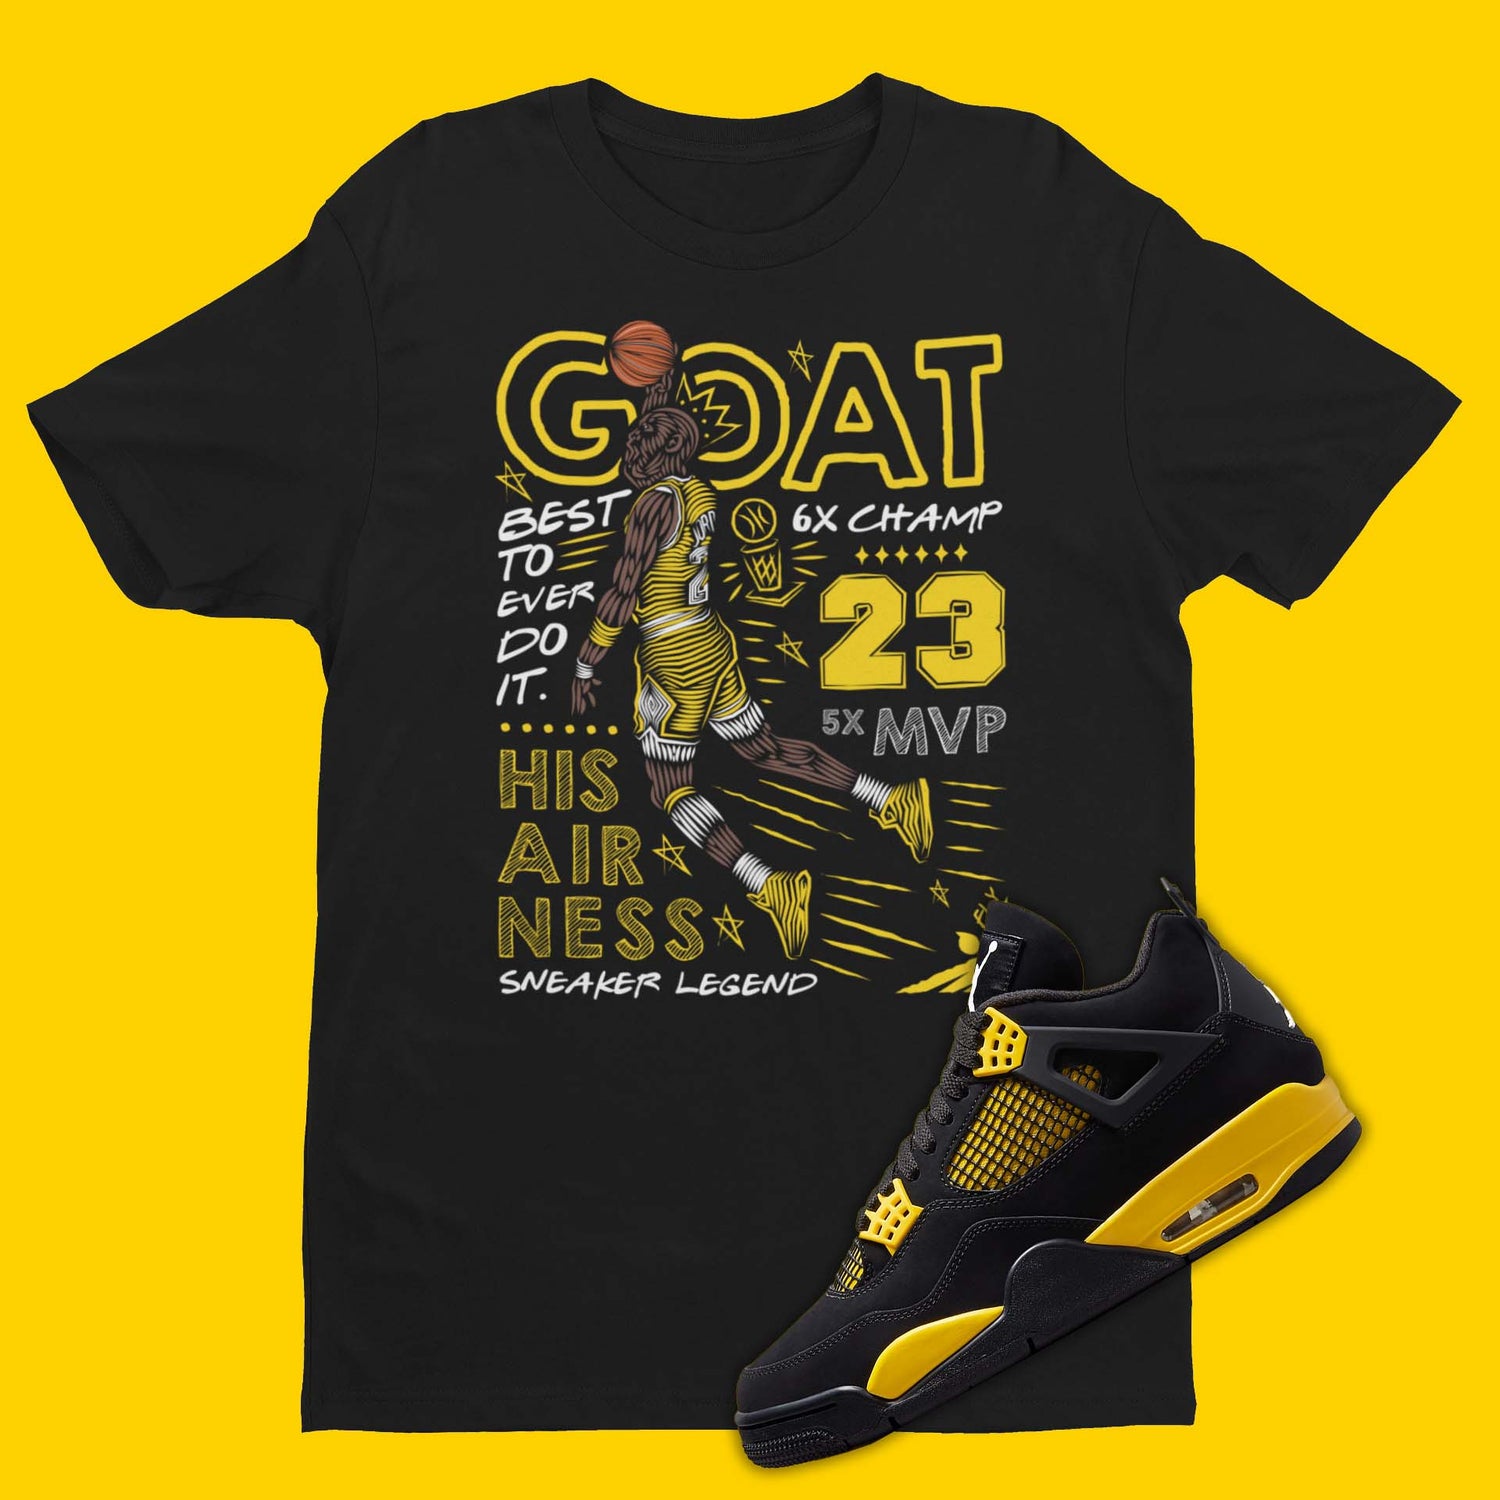 GOAT crew neck black t-shirt with 'Jordan Dunking' design inspired by Air Jordan 4 Thunder sneakers.